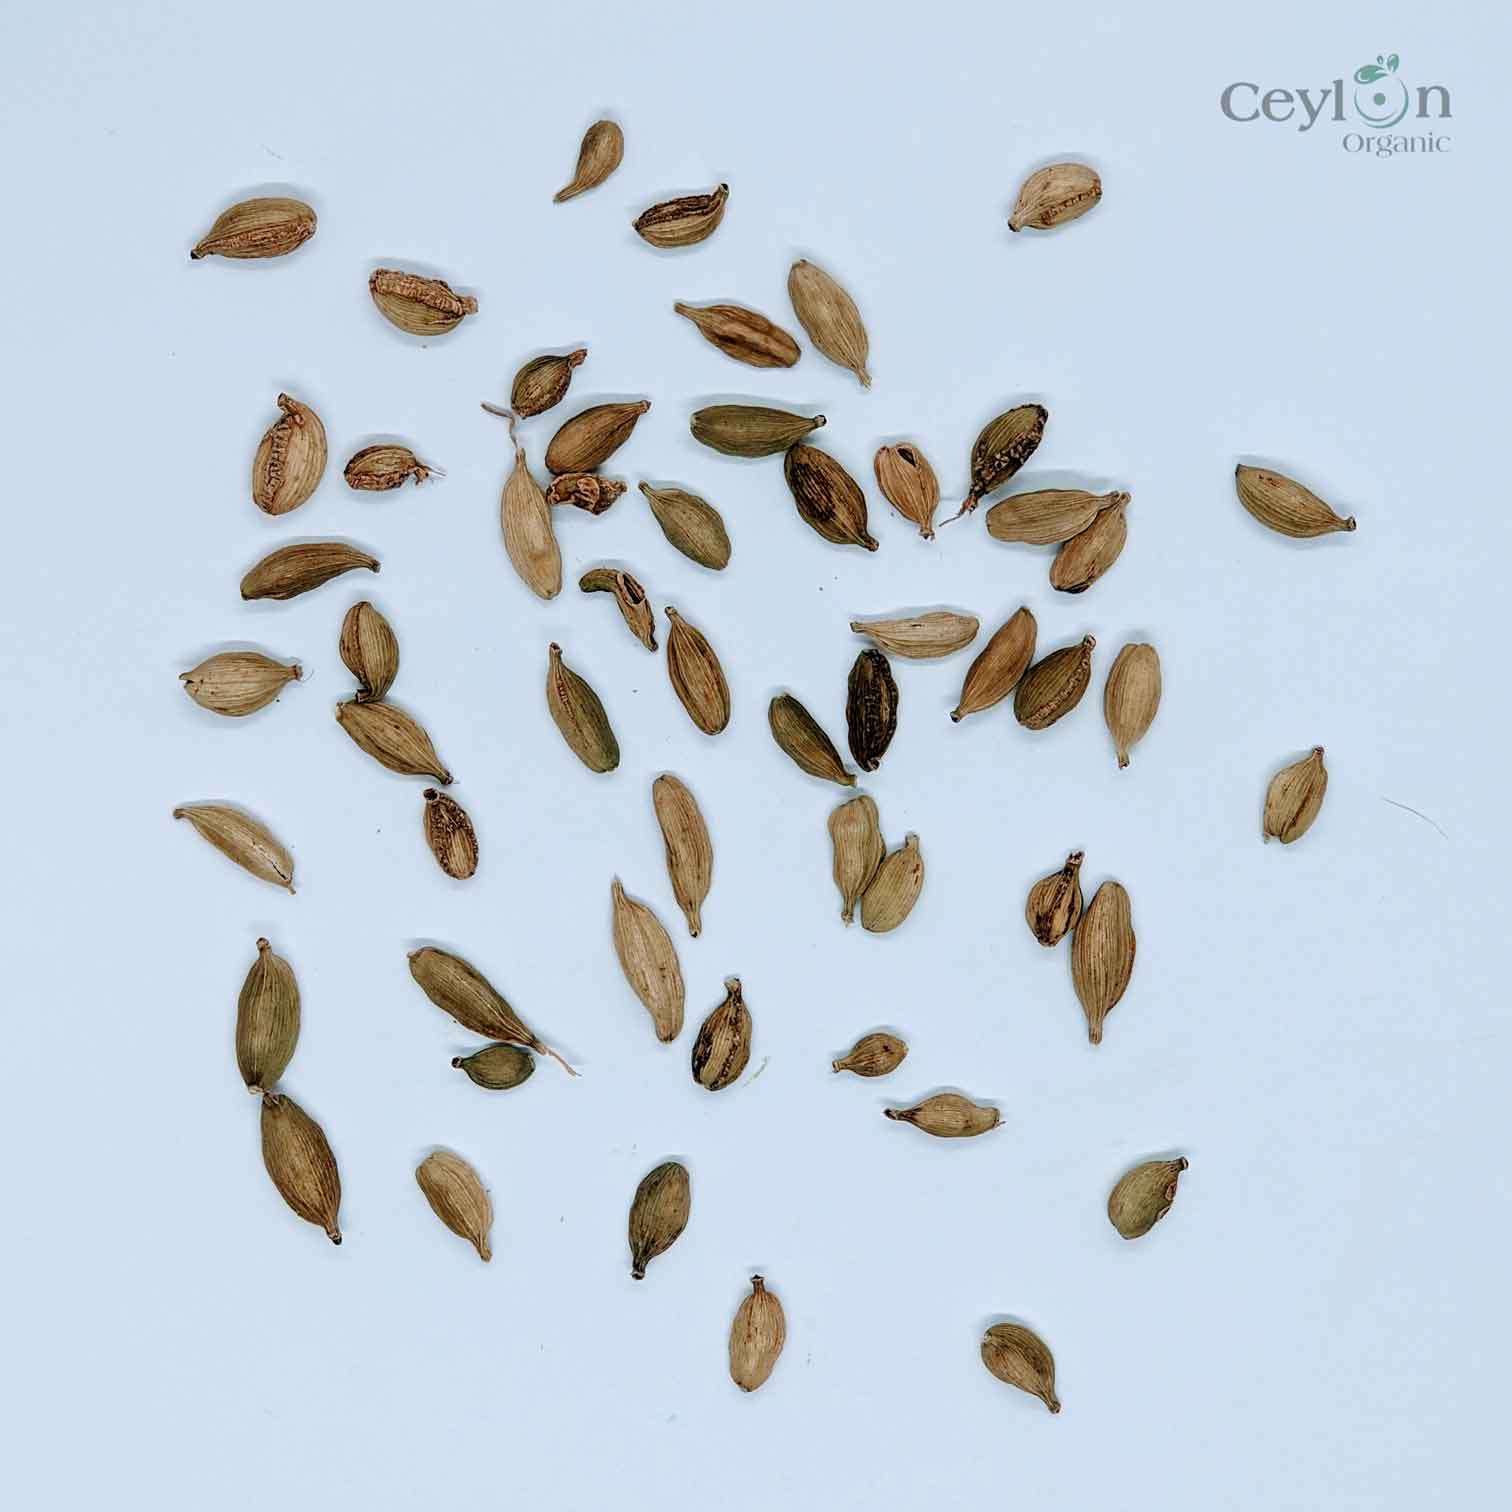 2kg+ Organic Cardamom, Cardamon, Cardamum, Best Quality Ceylon Spices | Ceylon Organic-2